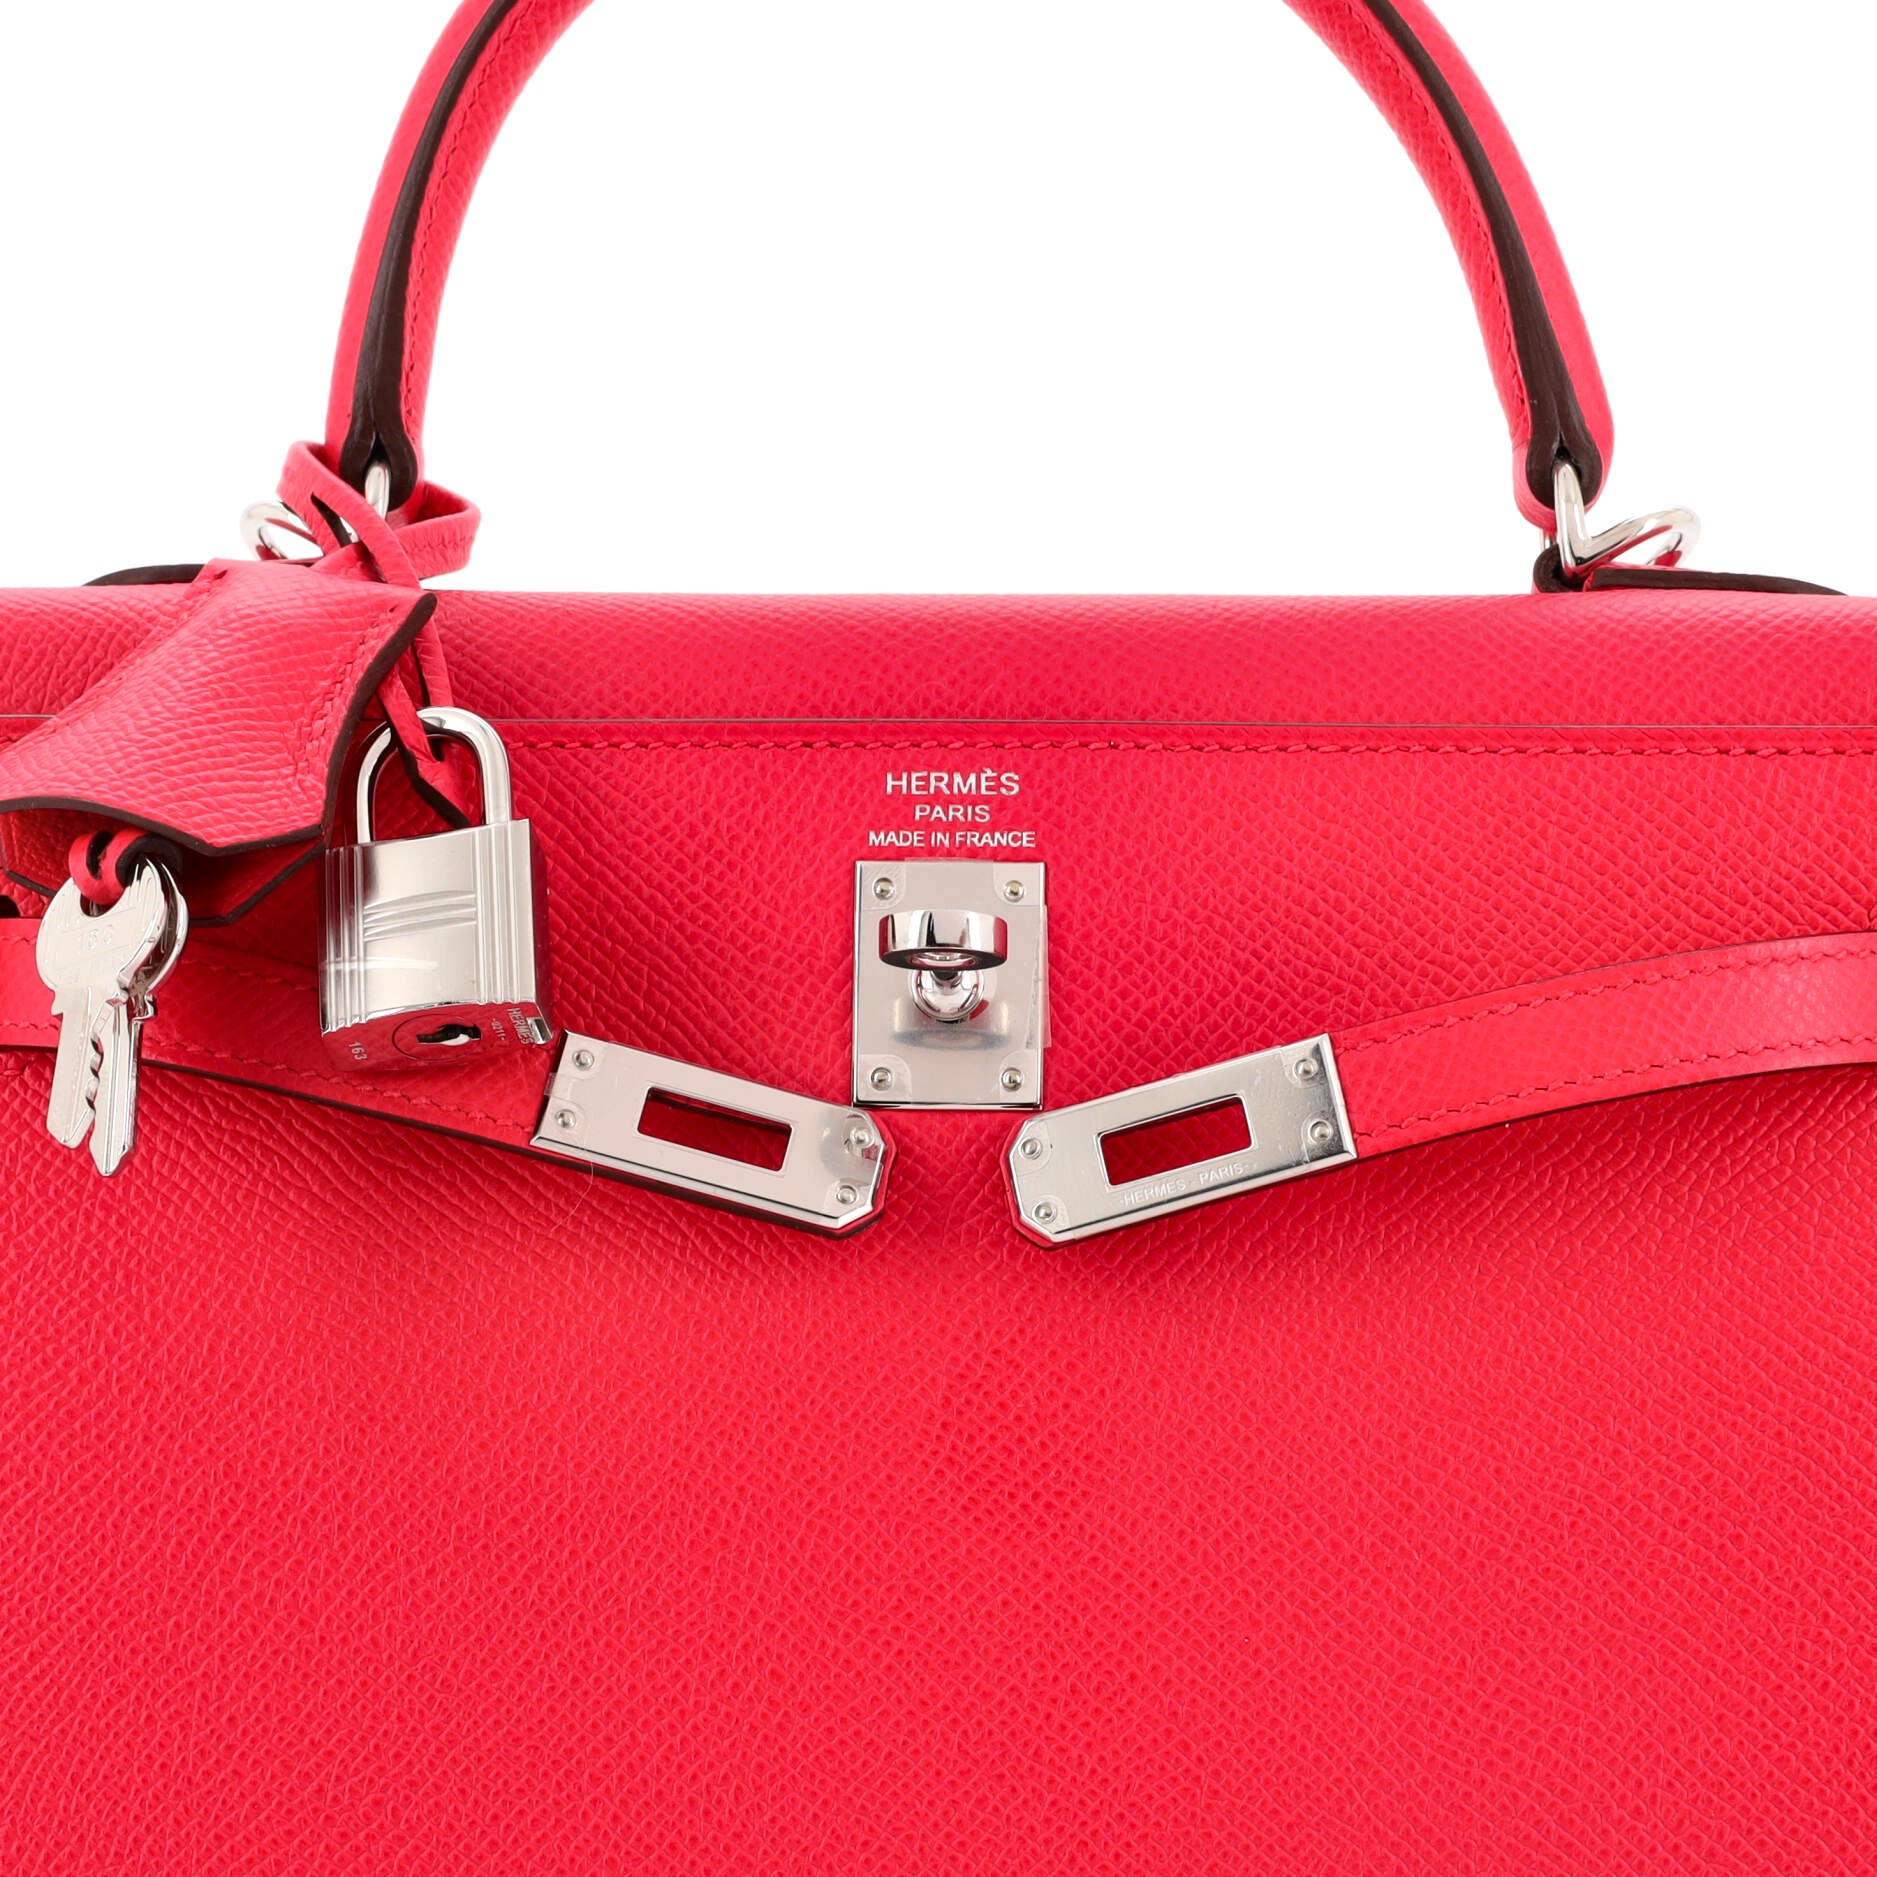 Hermes Birkin 30 Framboise Pink Red Bag Handbag Palladium Hardware 2021